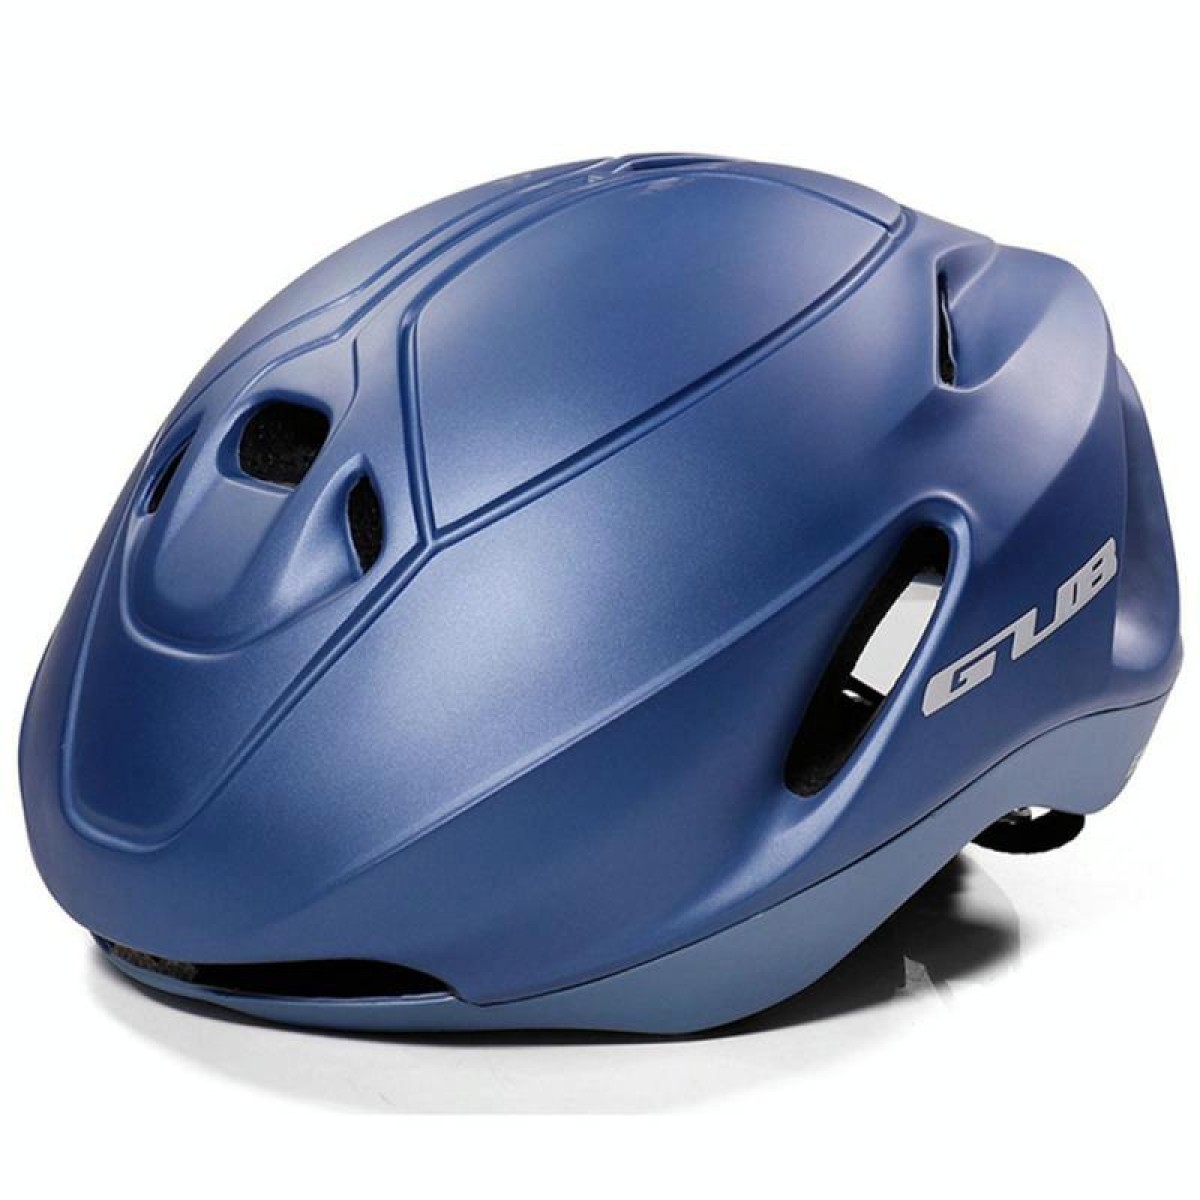 GUB Elite Unisex Adjustable Bicycle Riding Helmet, Size: M(Navy Blue)